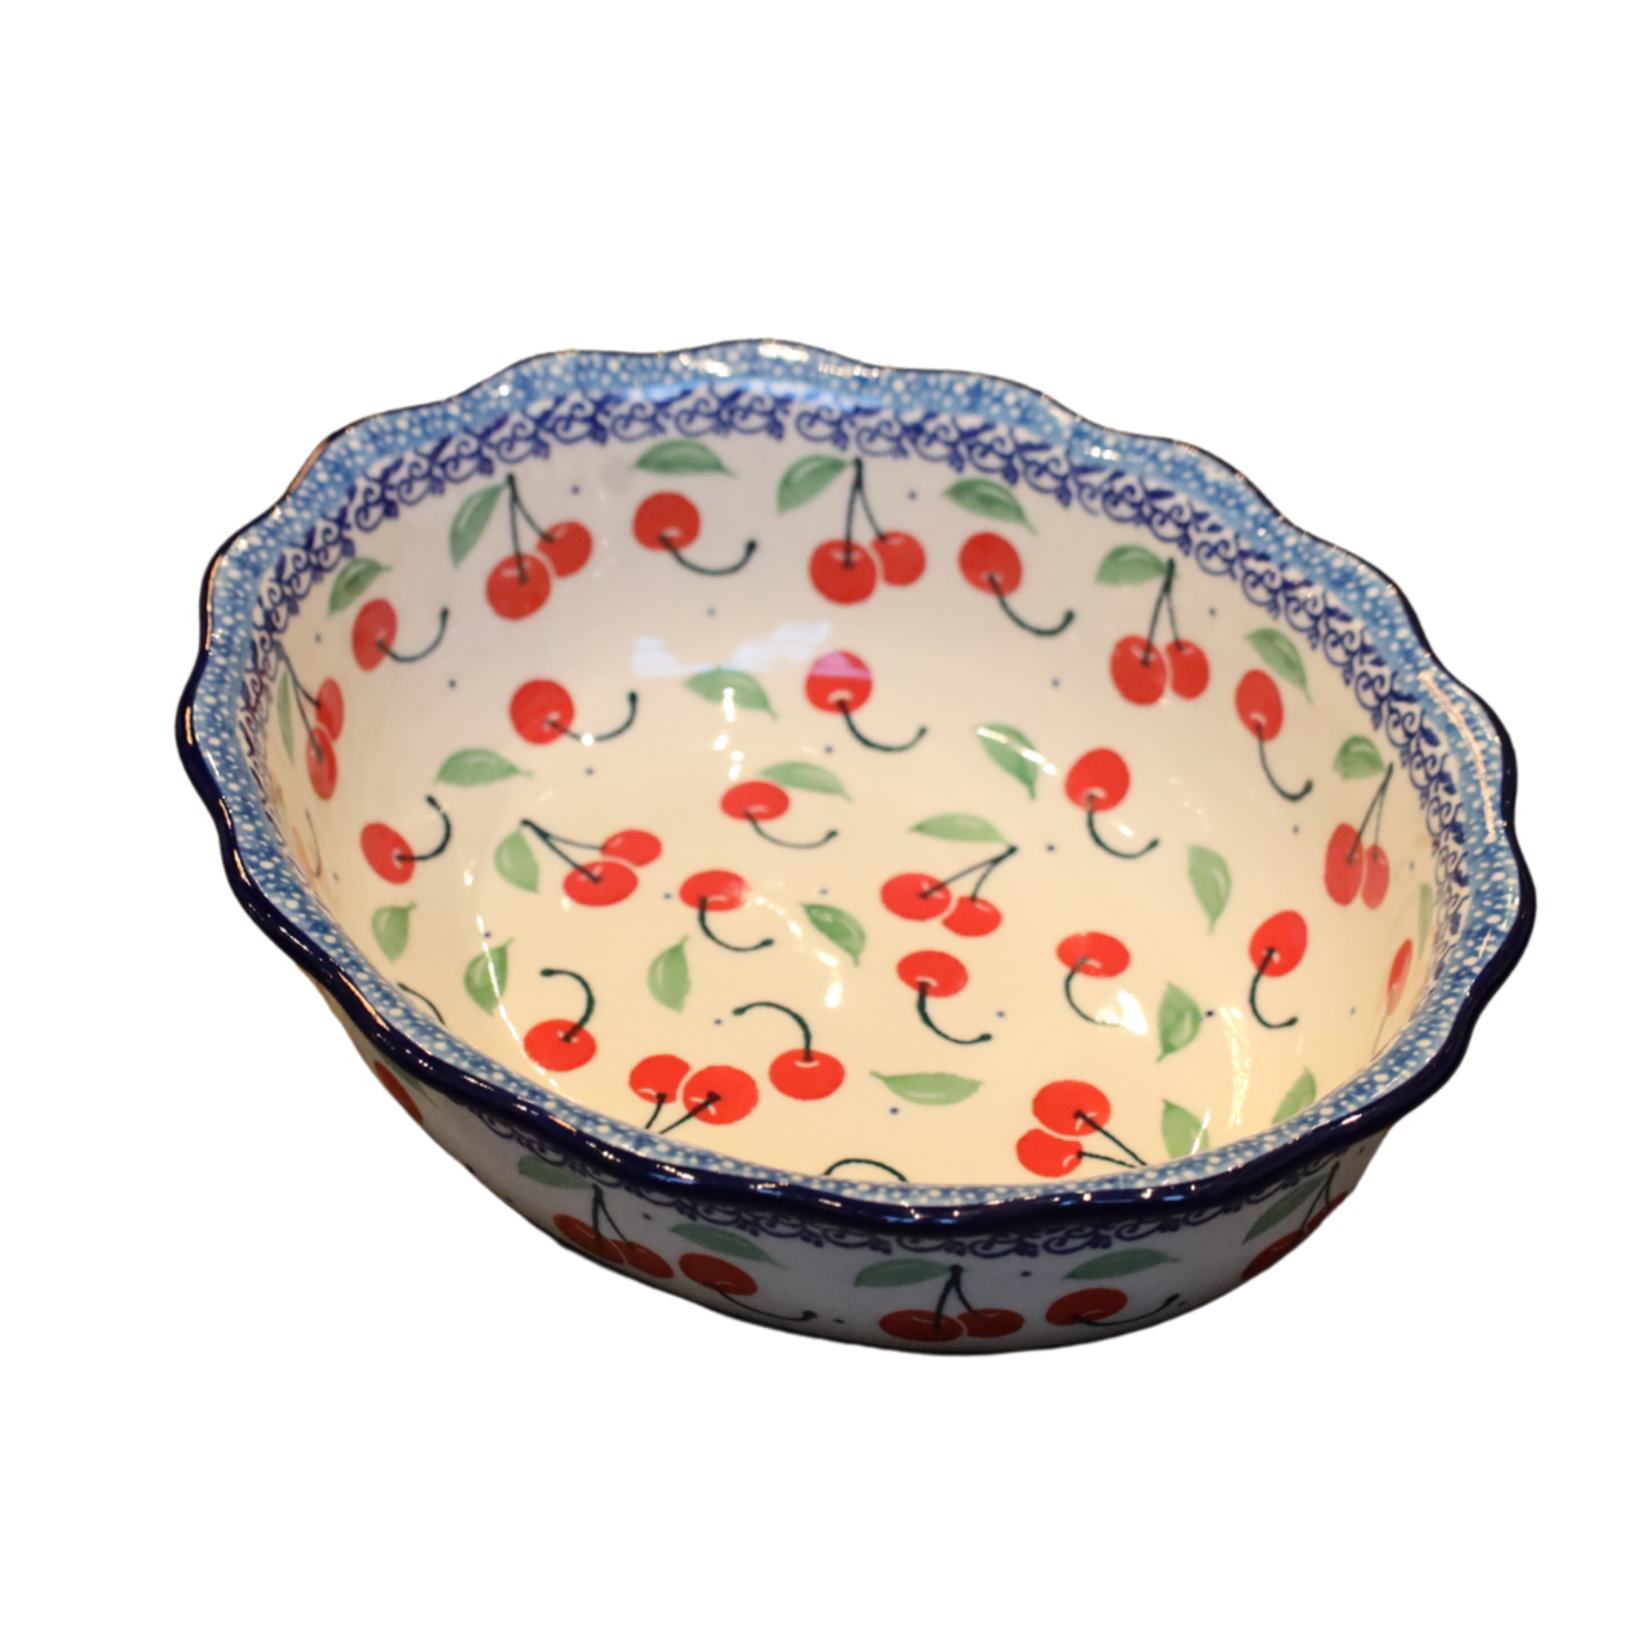 European Design Imports Inc. Polish Pottery Oval Scalloped Bowl, Cherries